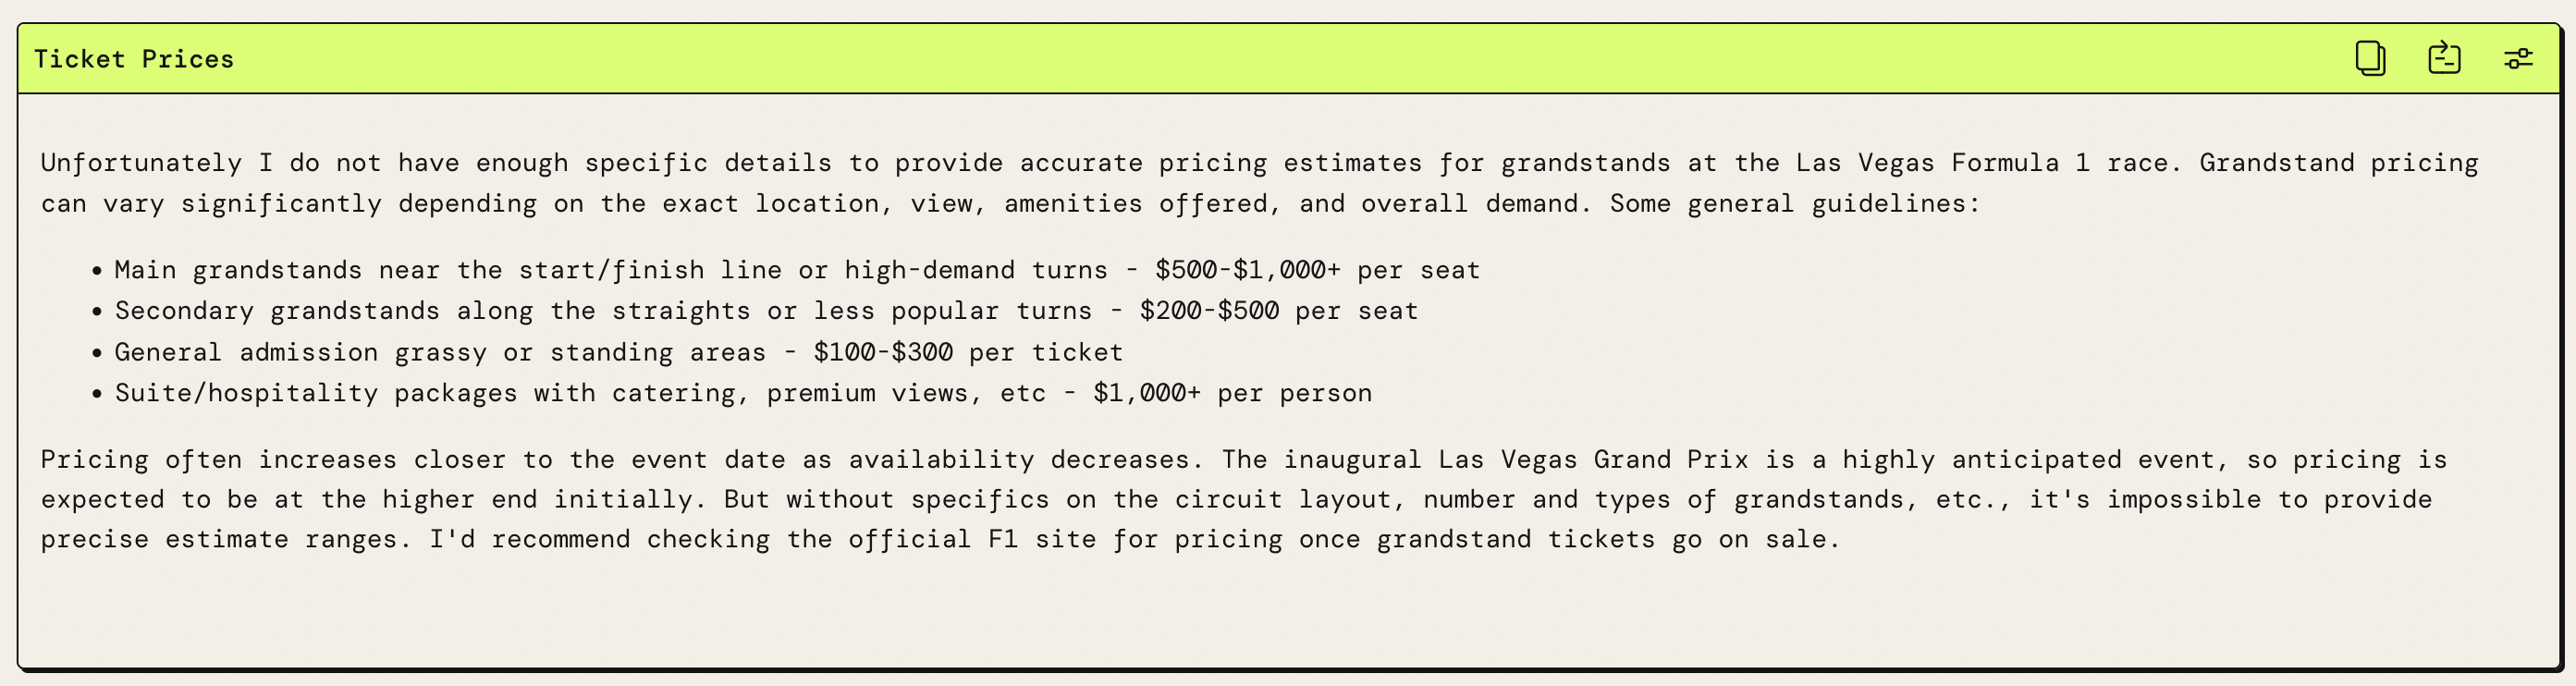 PartyRock generated - Las Vegas Ticket Price